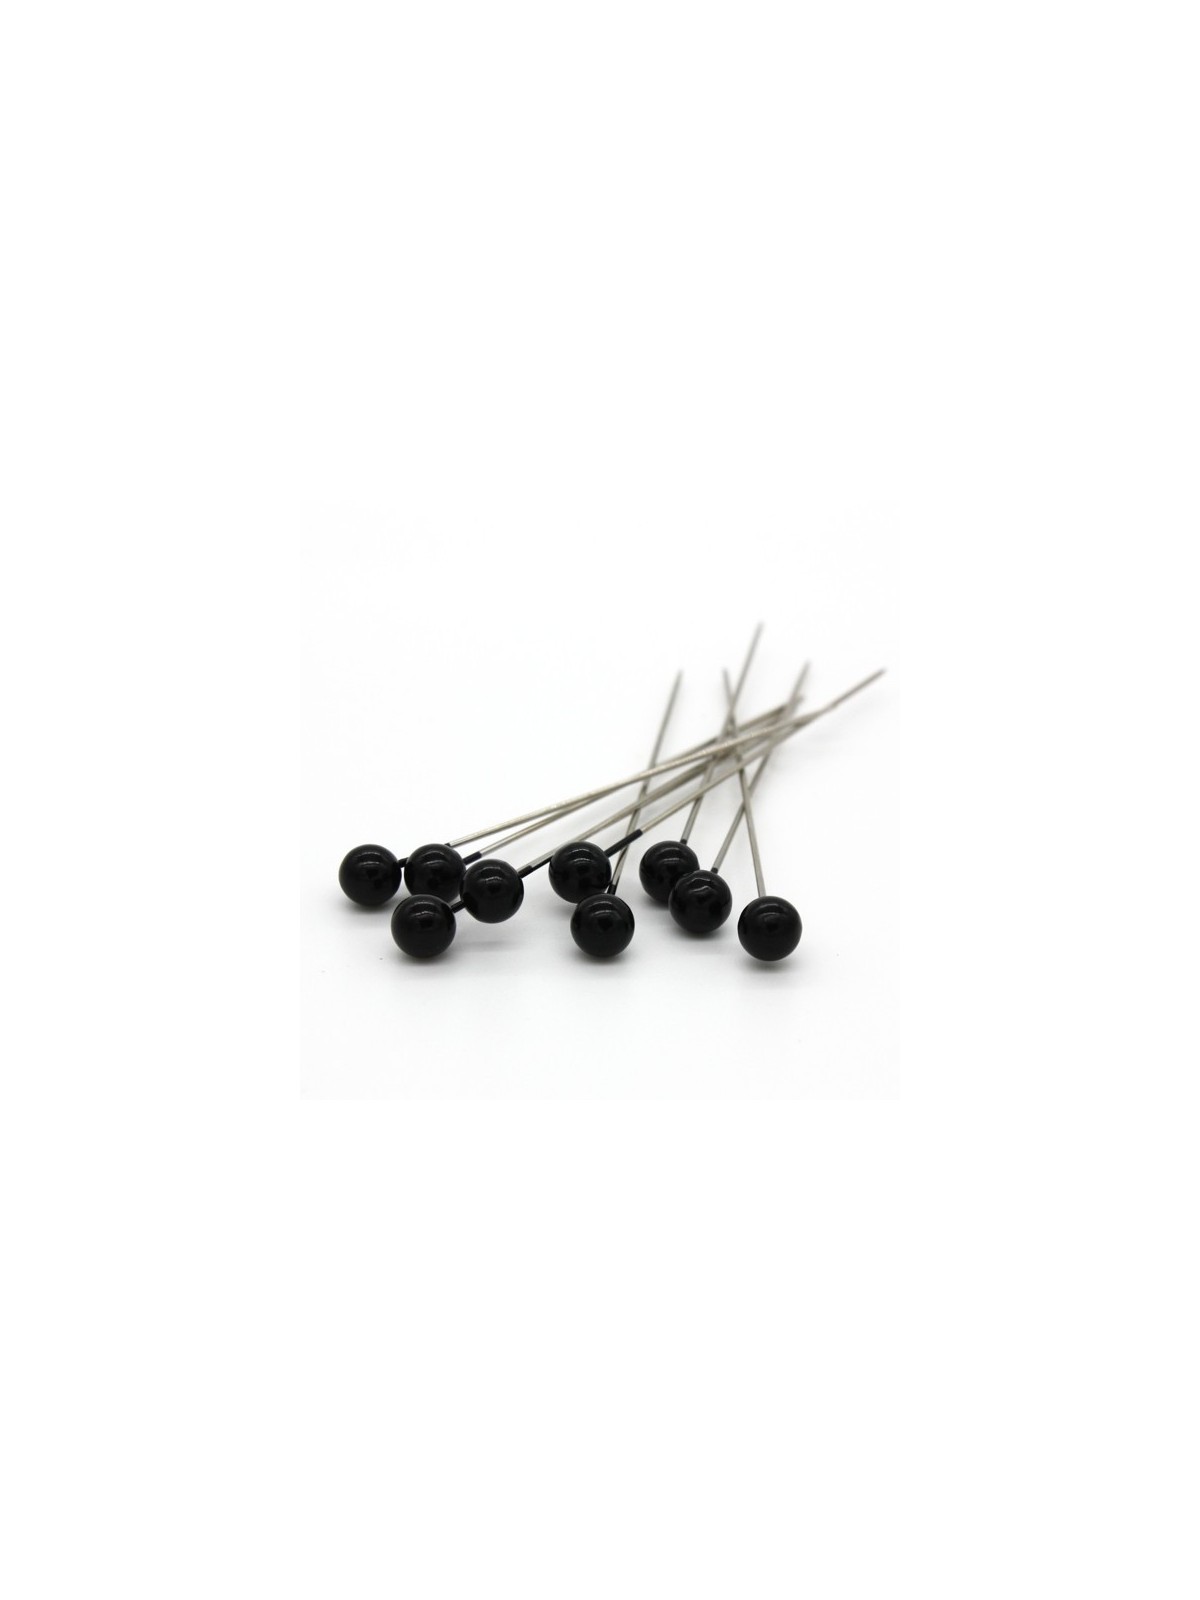 Dekorační špendlík - černá  perla - 65mm/9ks